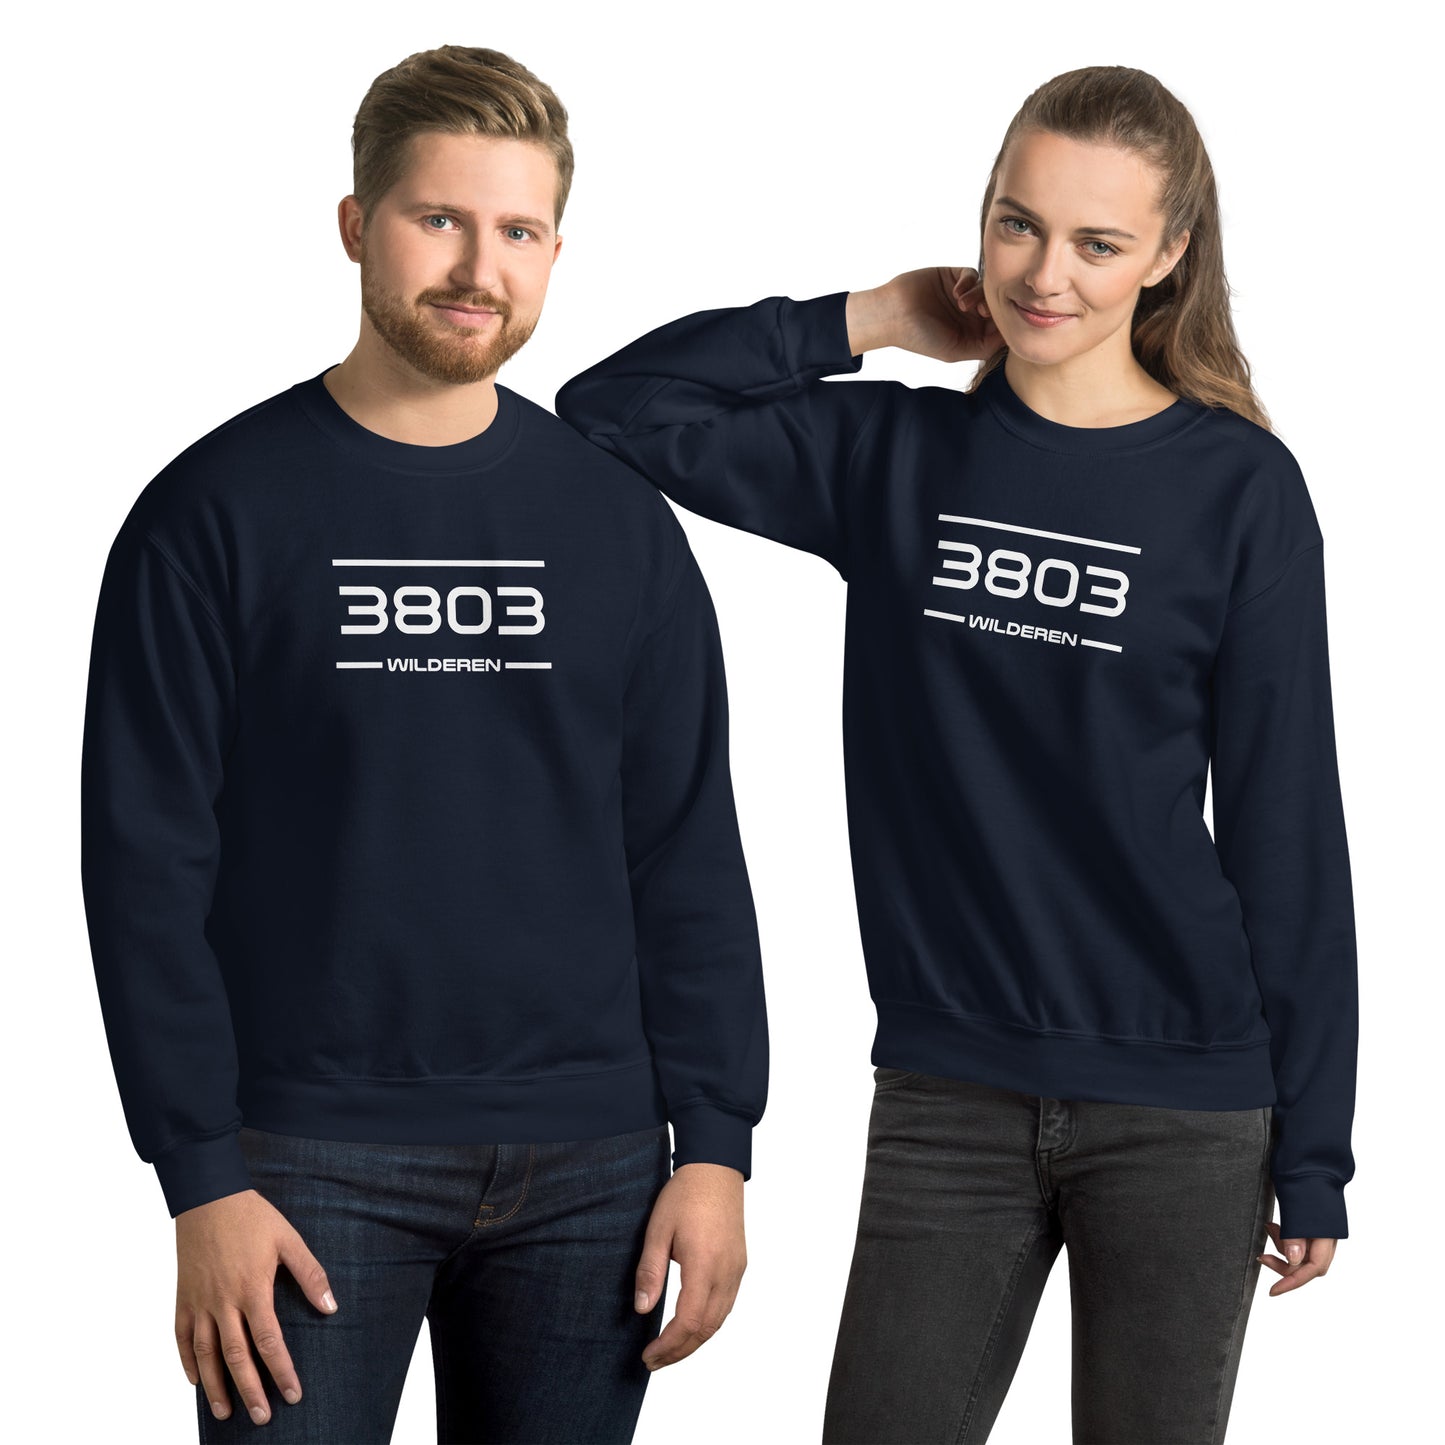 Sweater - 3803 - Wilderen (M/V)